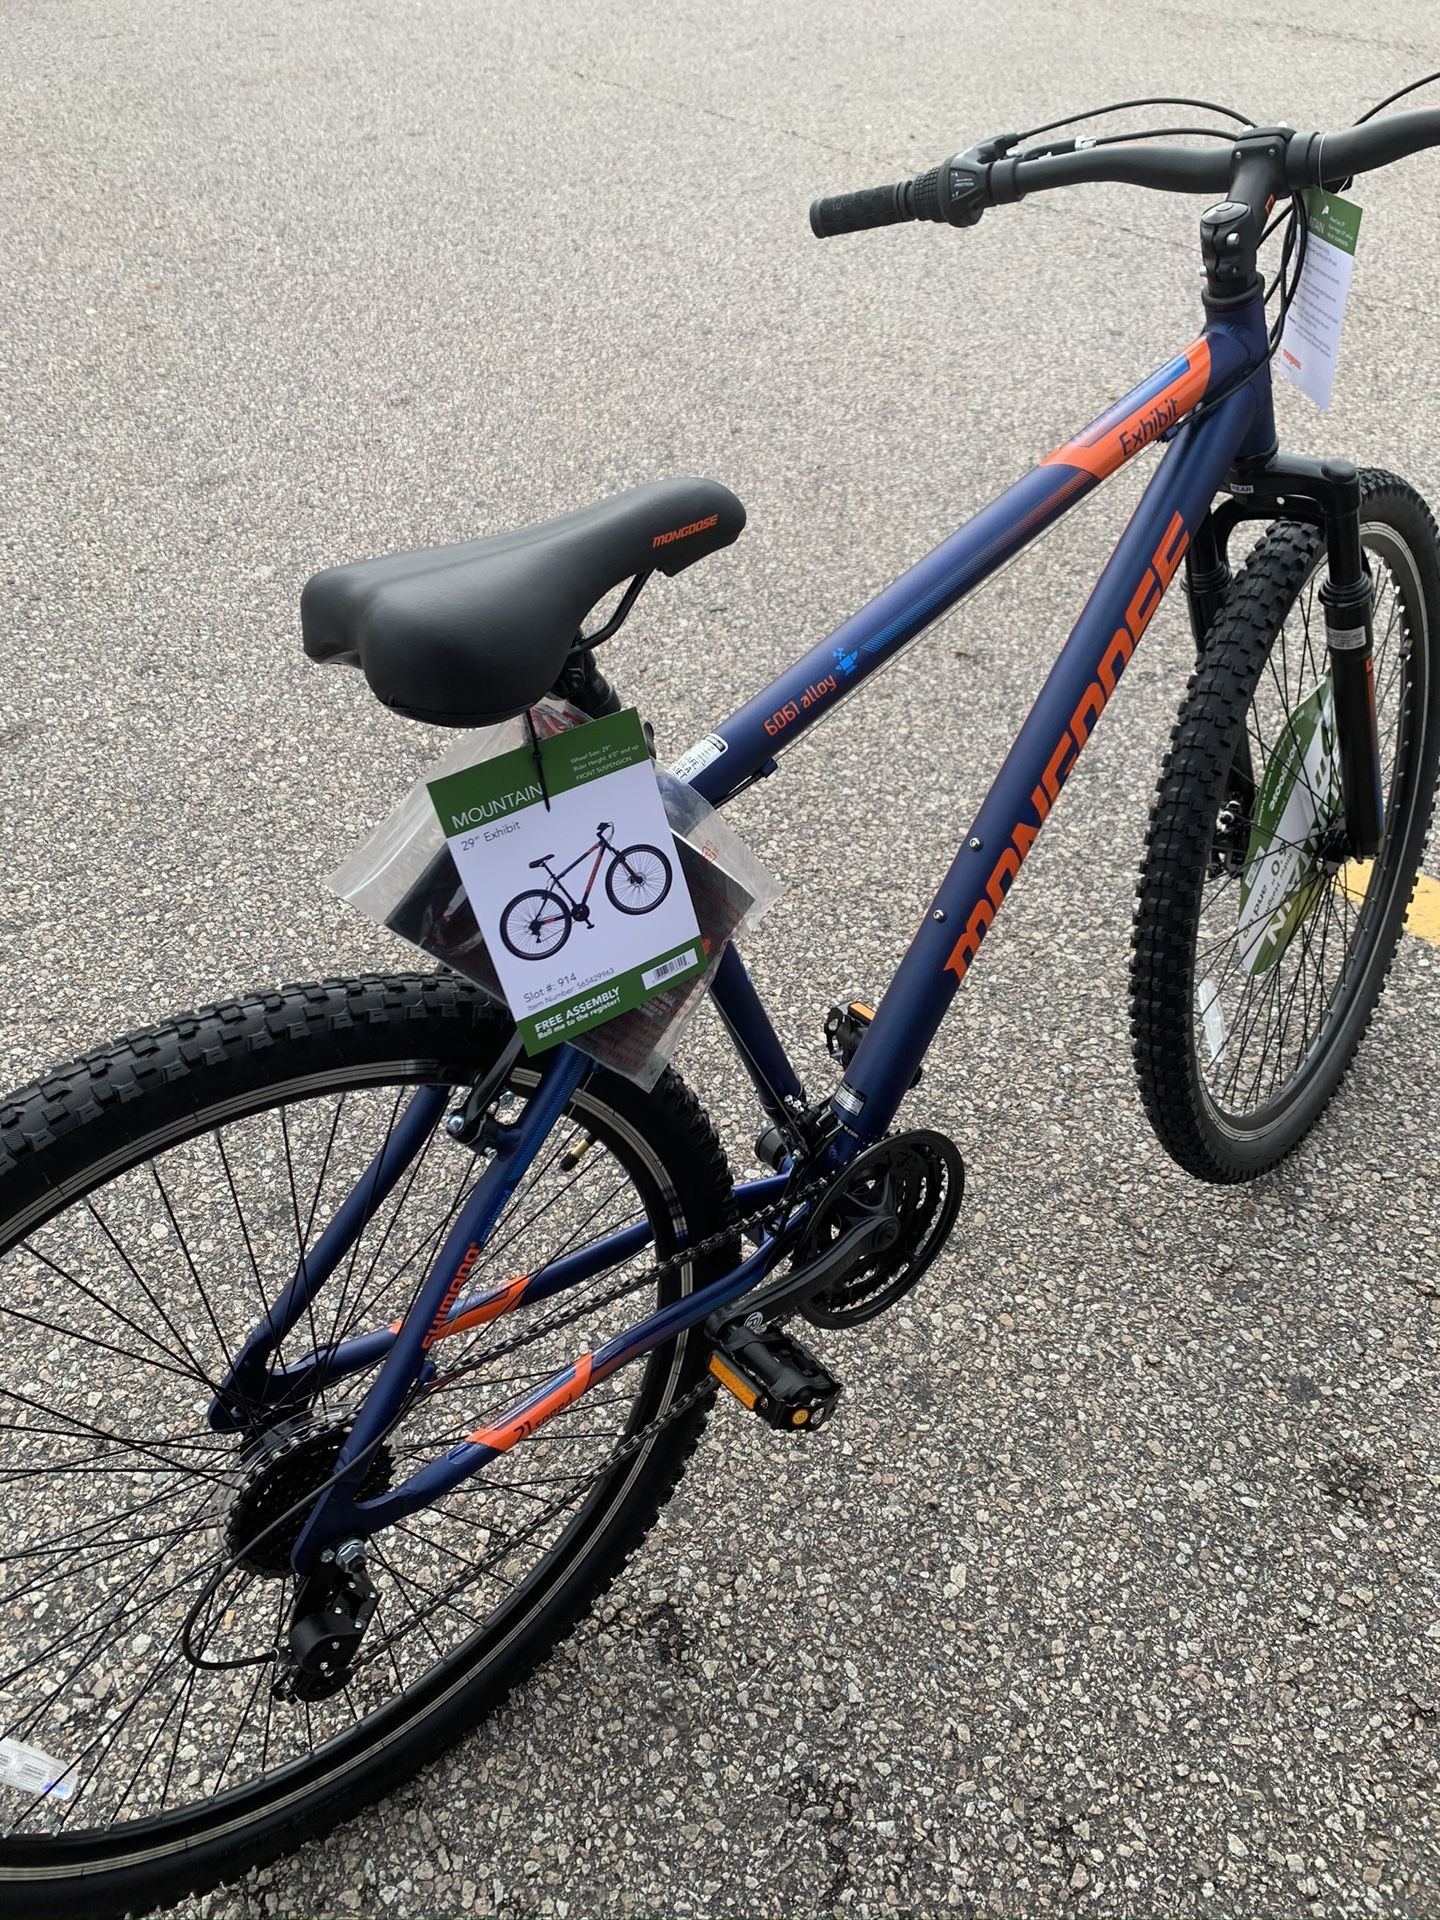 Mongoose Exhibit Mountain Bike, 29-inch wheels, 21 speeds, blue